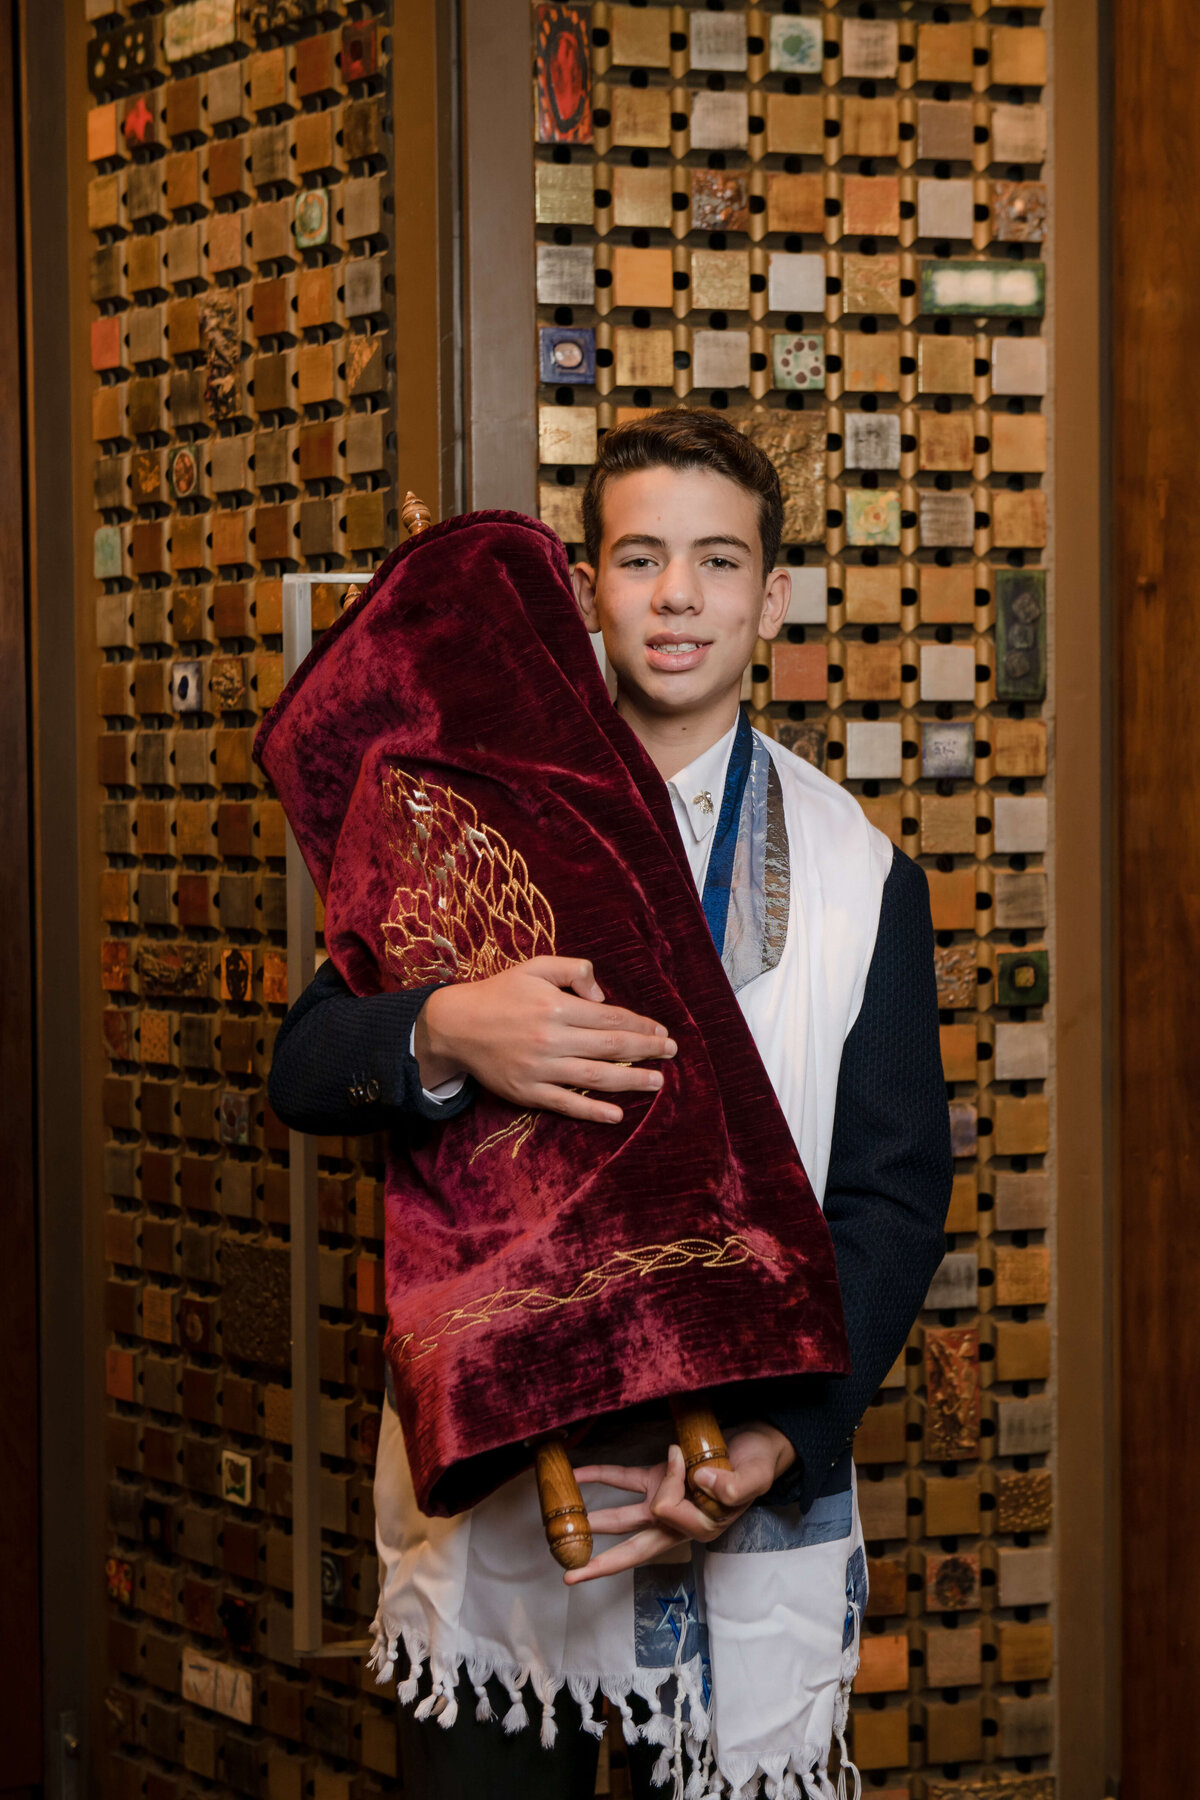 Bar Mitzvah ceremony at a Los Angeles synagogue